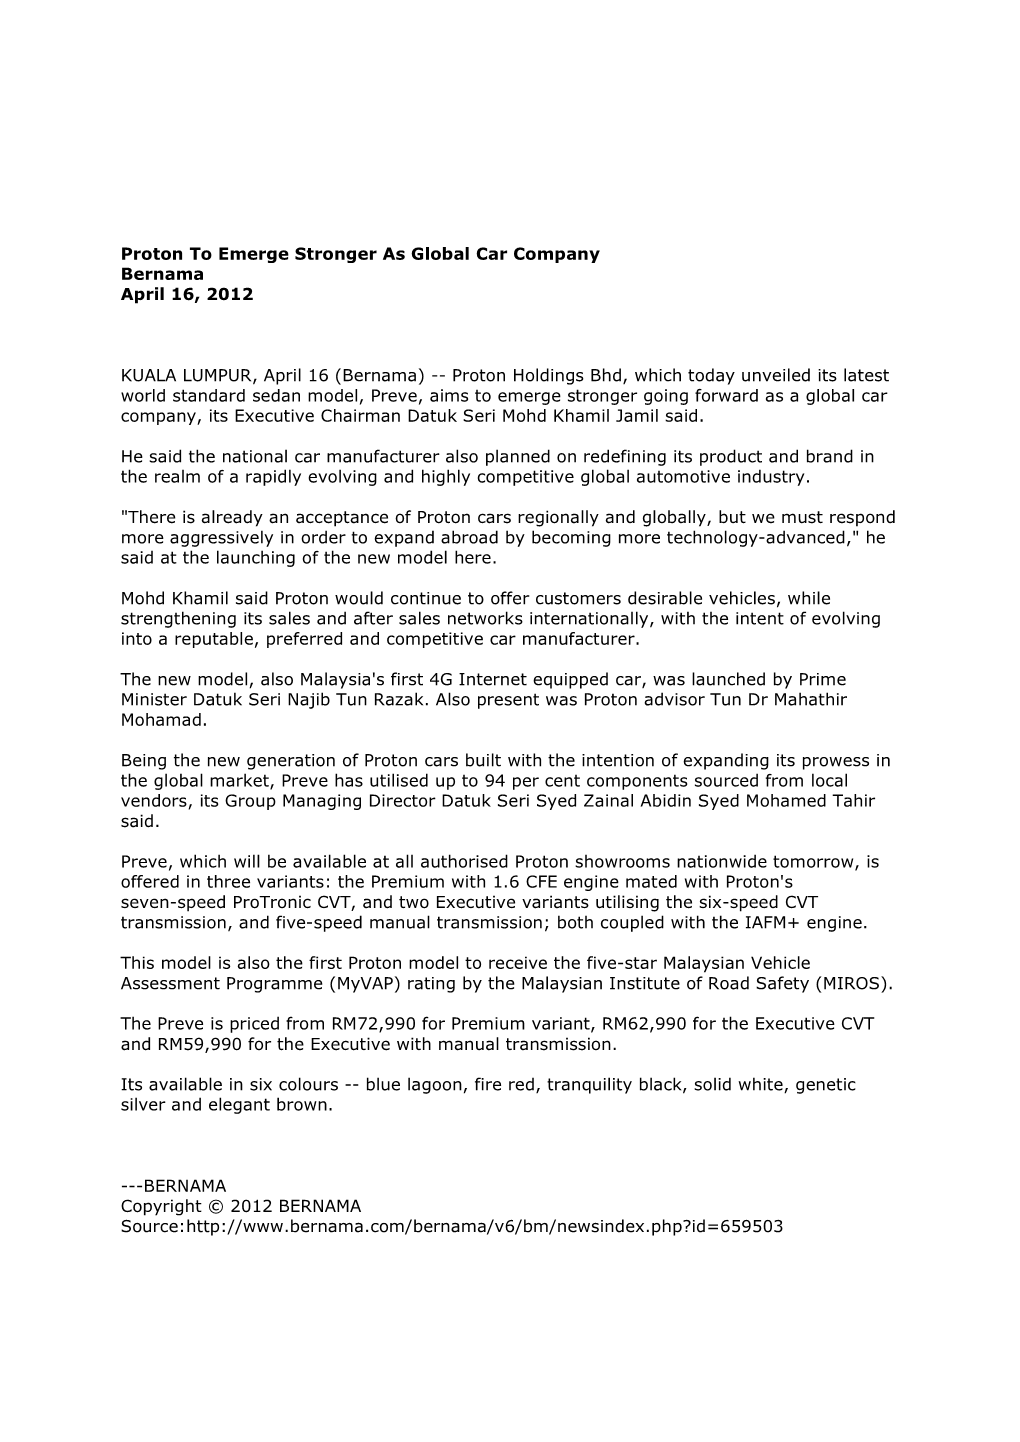 Proton to Emerge Stronger As Global Car Company Bernama April 16, 2012